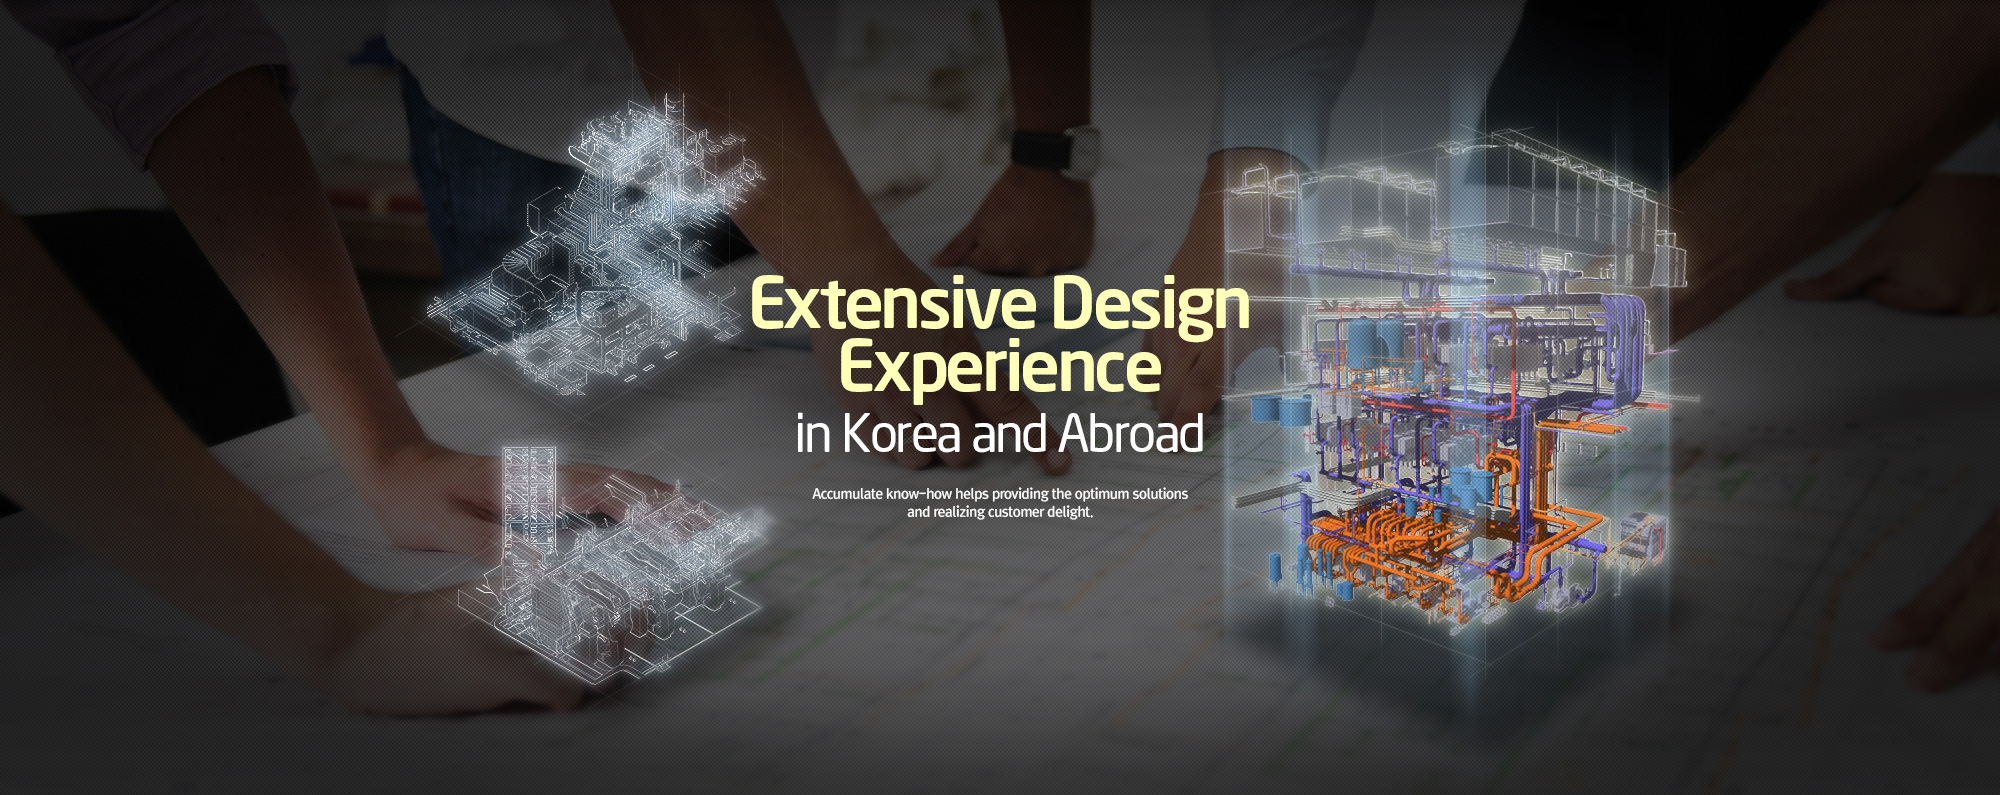 Extensive Design Experience